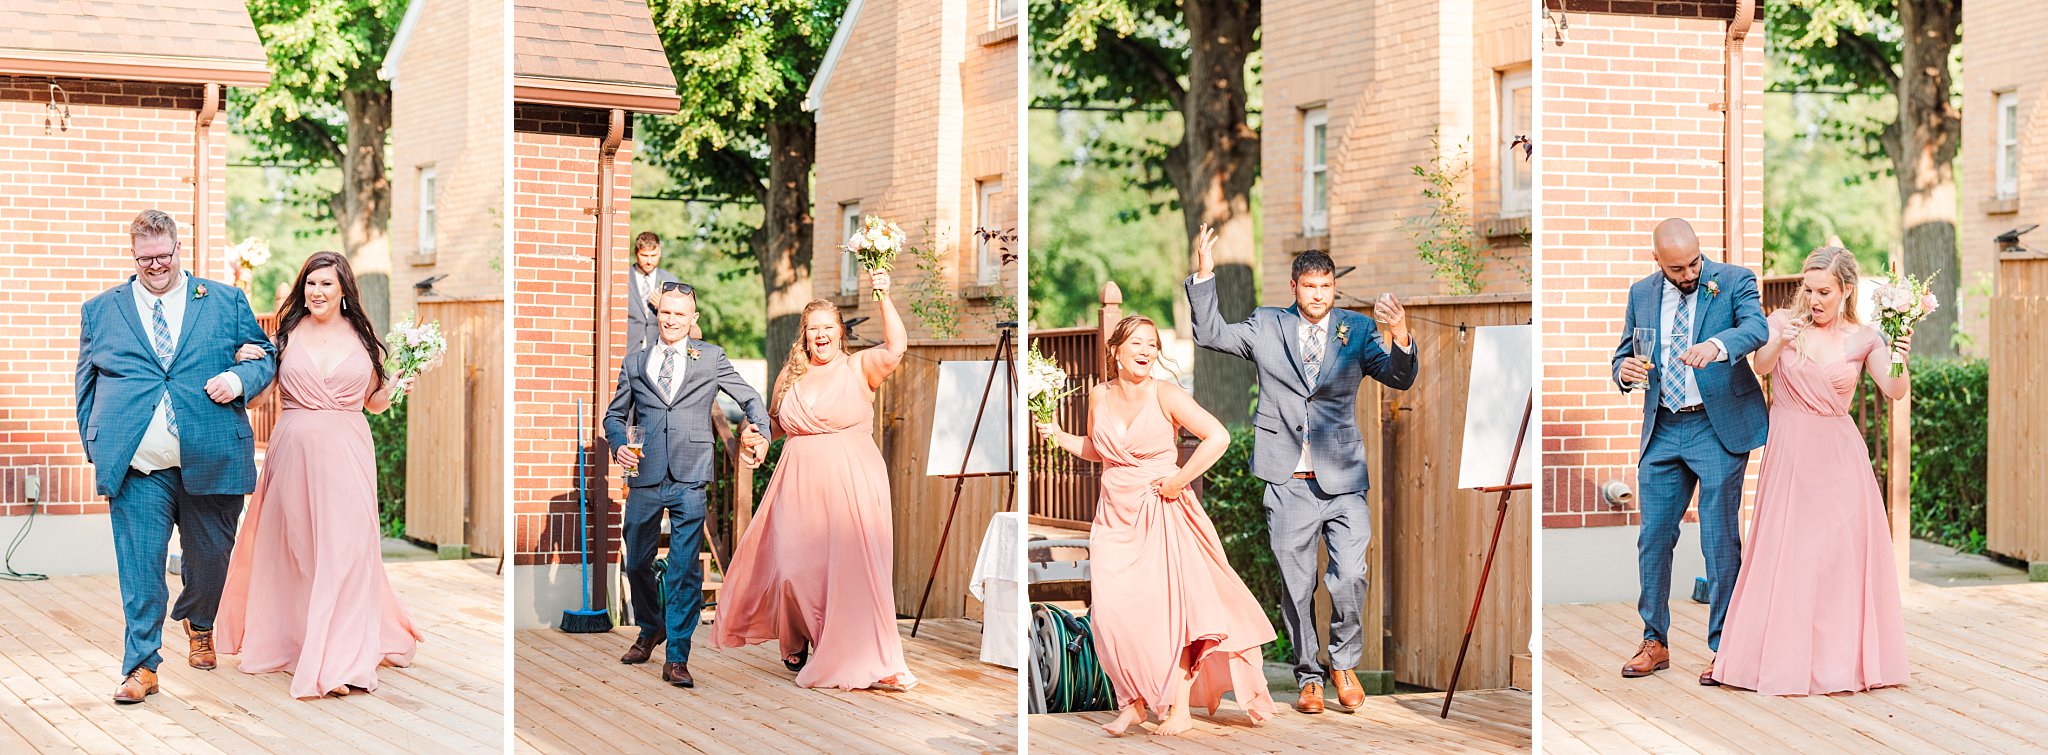 the wedding party dances across a wooden patio deck